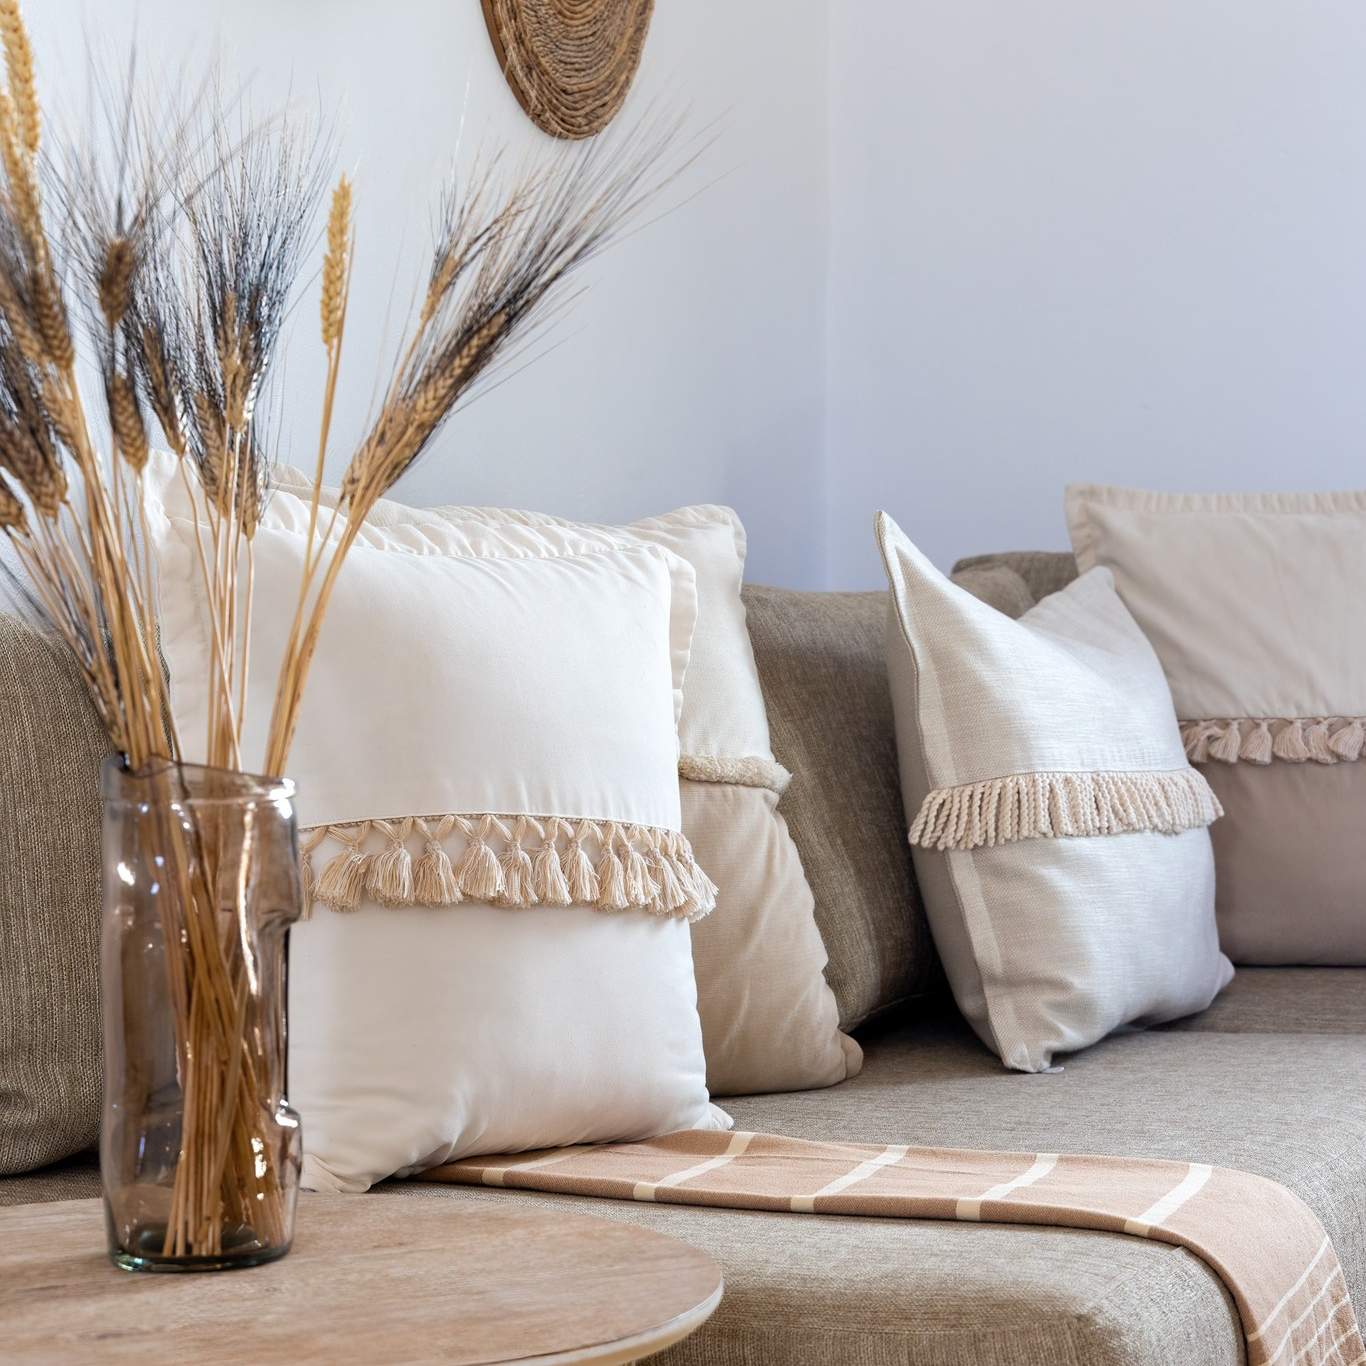 Aiolos. Less is more. Our minimalistic living room is a perfect blend of elegance and simplicity, designed to enhance relaxation.
.
#AmalgamHomes #ArtOfComfort #GreekGetaways #IslandEscapes #SerenitySeeker #CoastalCharm #MinimalistLiving #GreekIslands #CycladesMagic #SeasideBliss #VisitGreece #DiscoverGreece #TravelInspiration #SavorTheMoment #DreamDestinations #TranquilRetreats #Paros #Naxos #Mykonos #Tinos